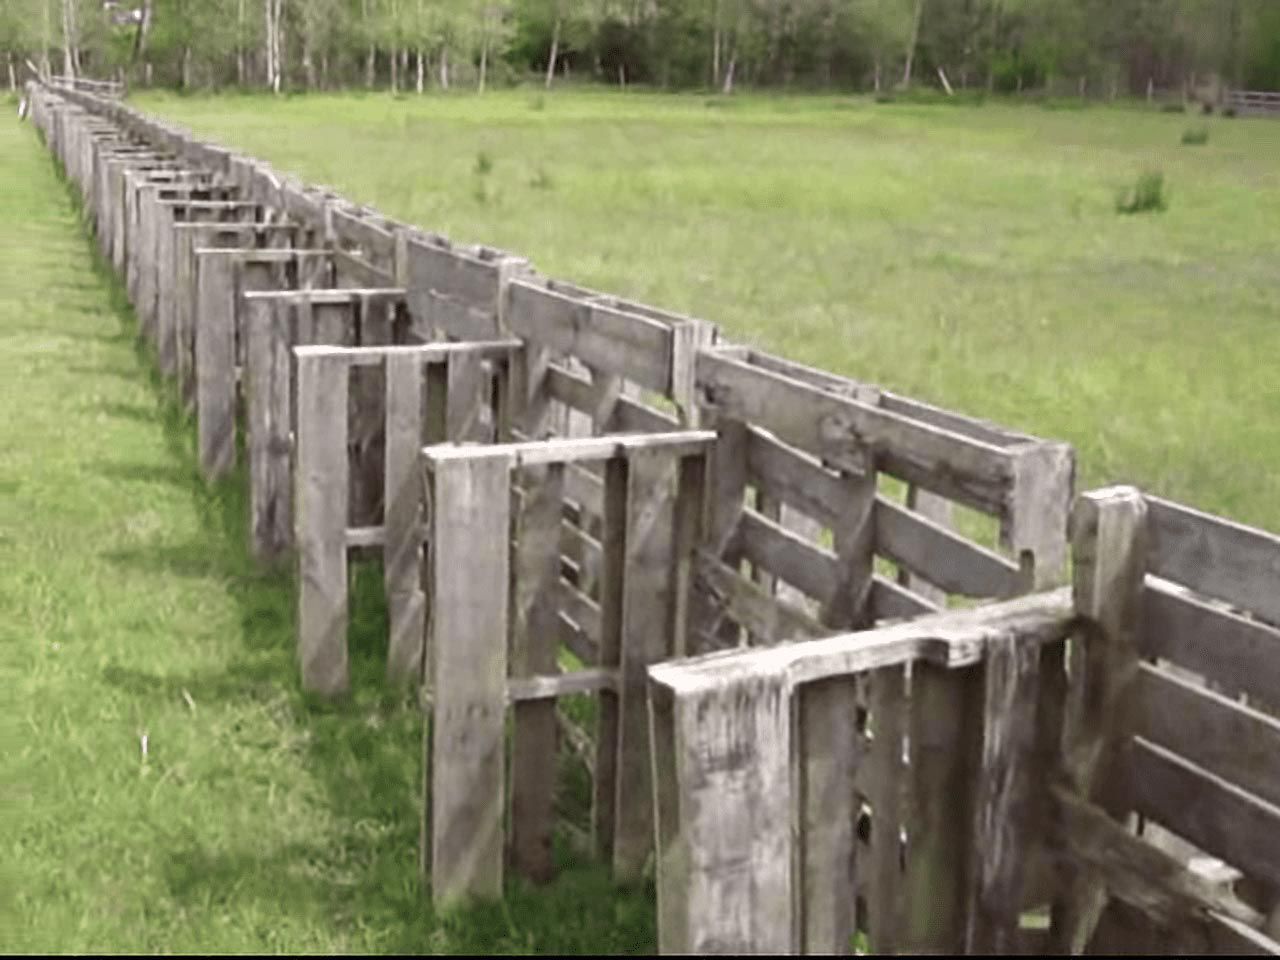 Wood Pallet Fence